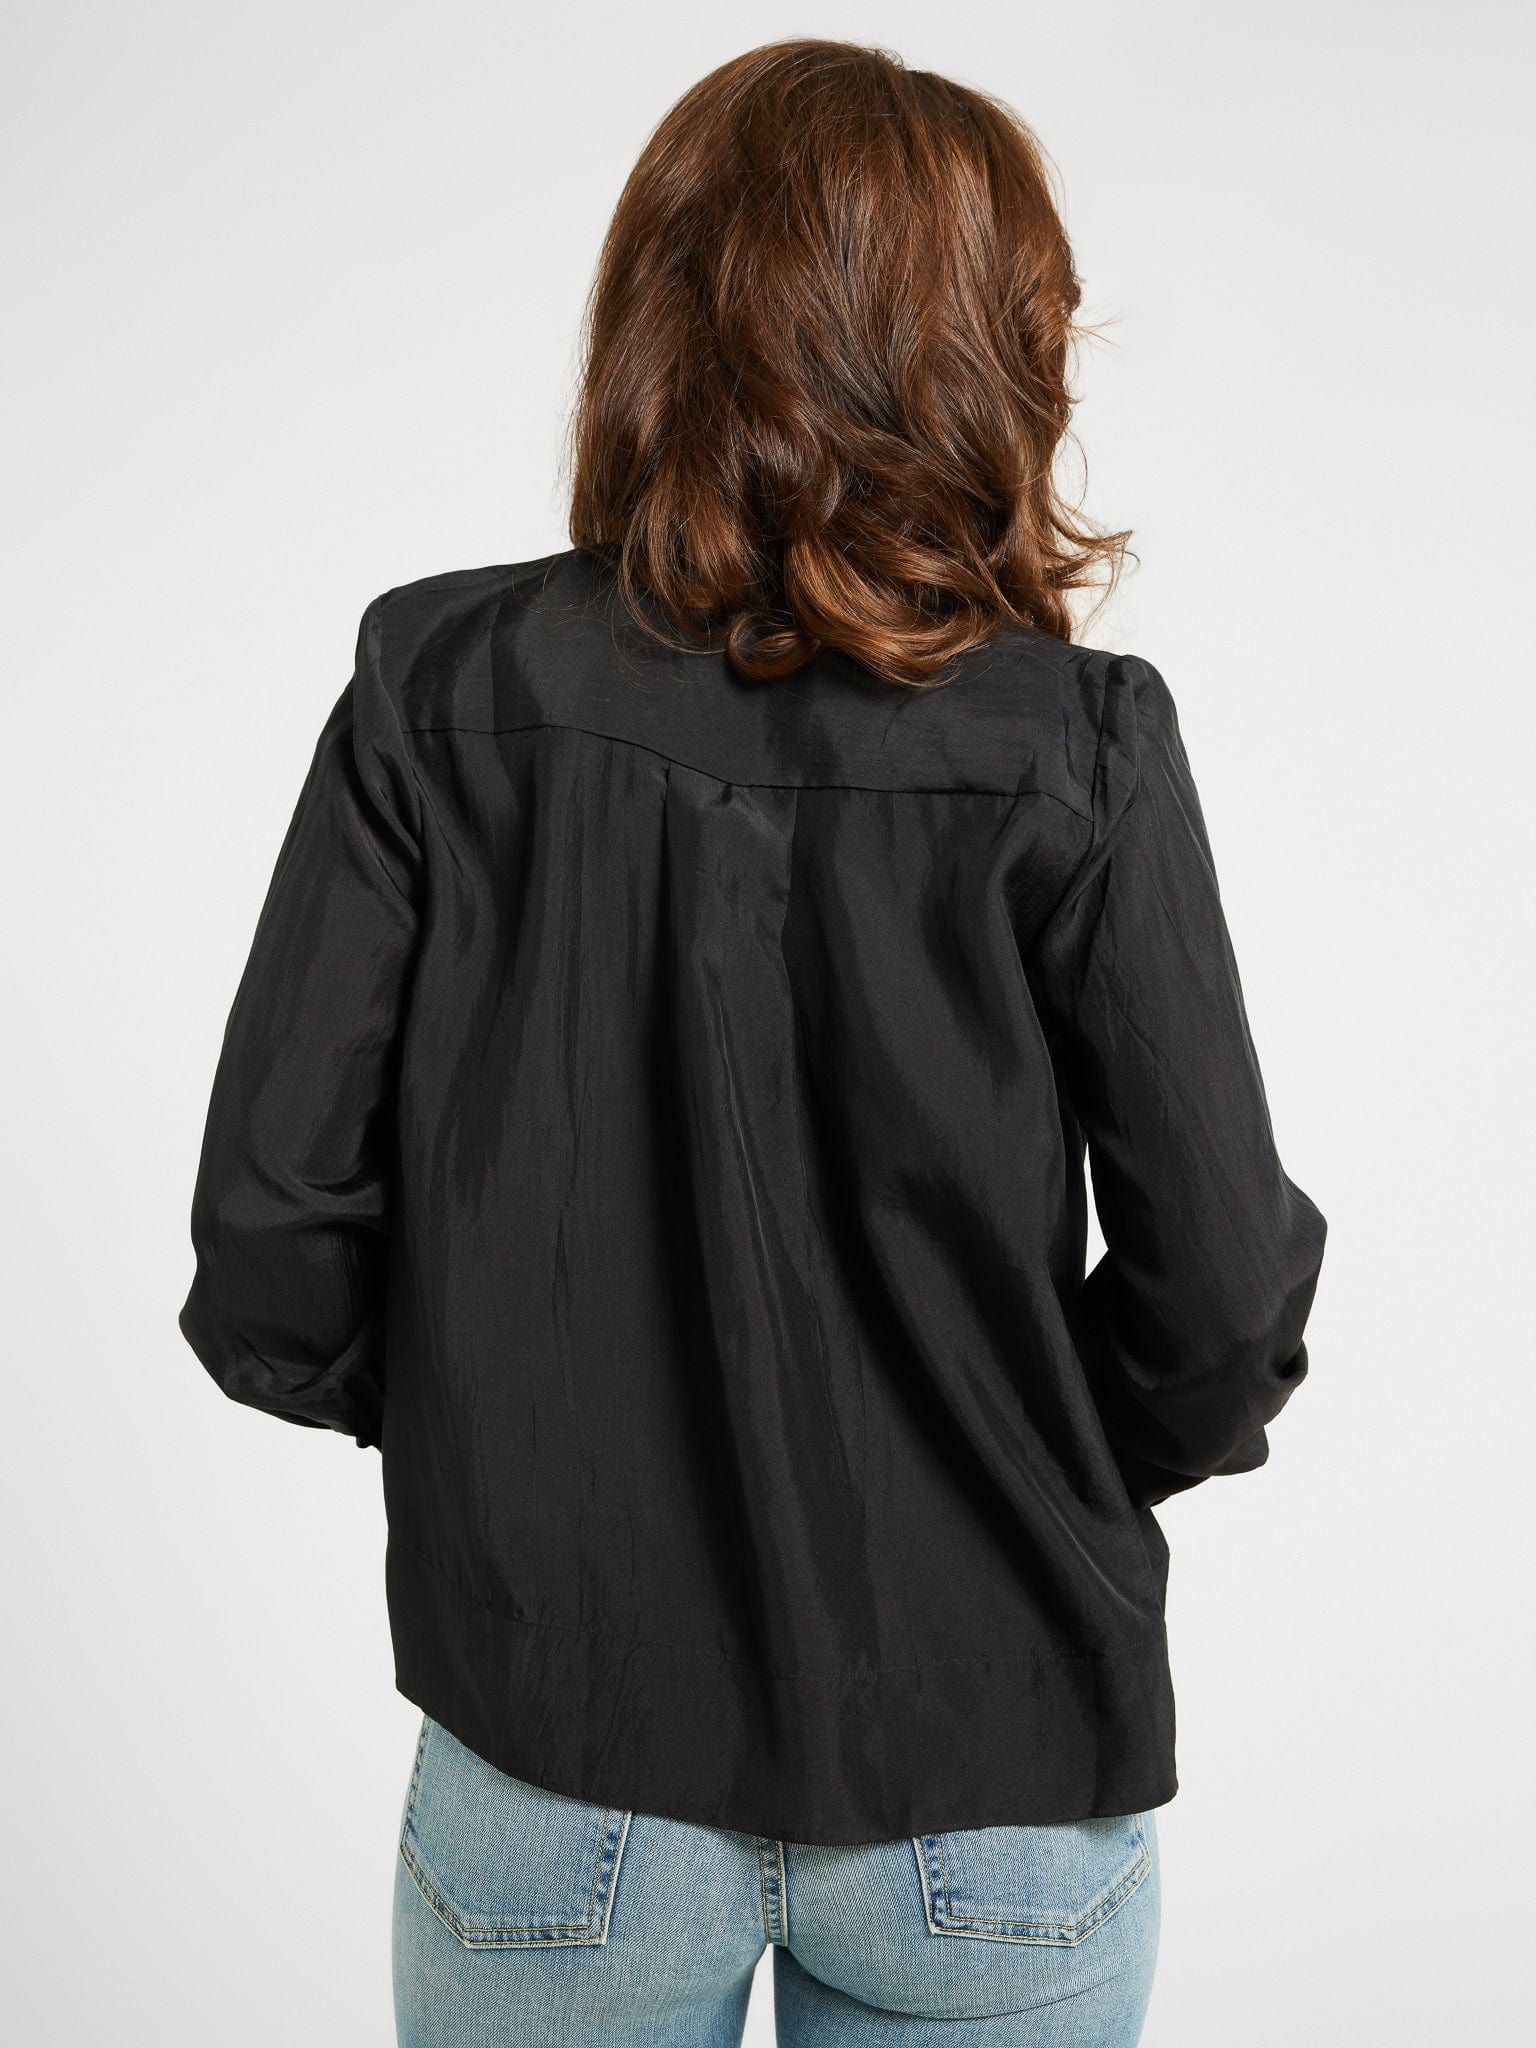 MILLE Clothing Freya Top in Black Silk